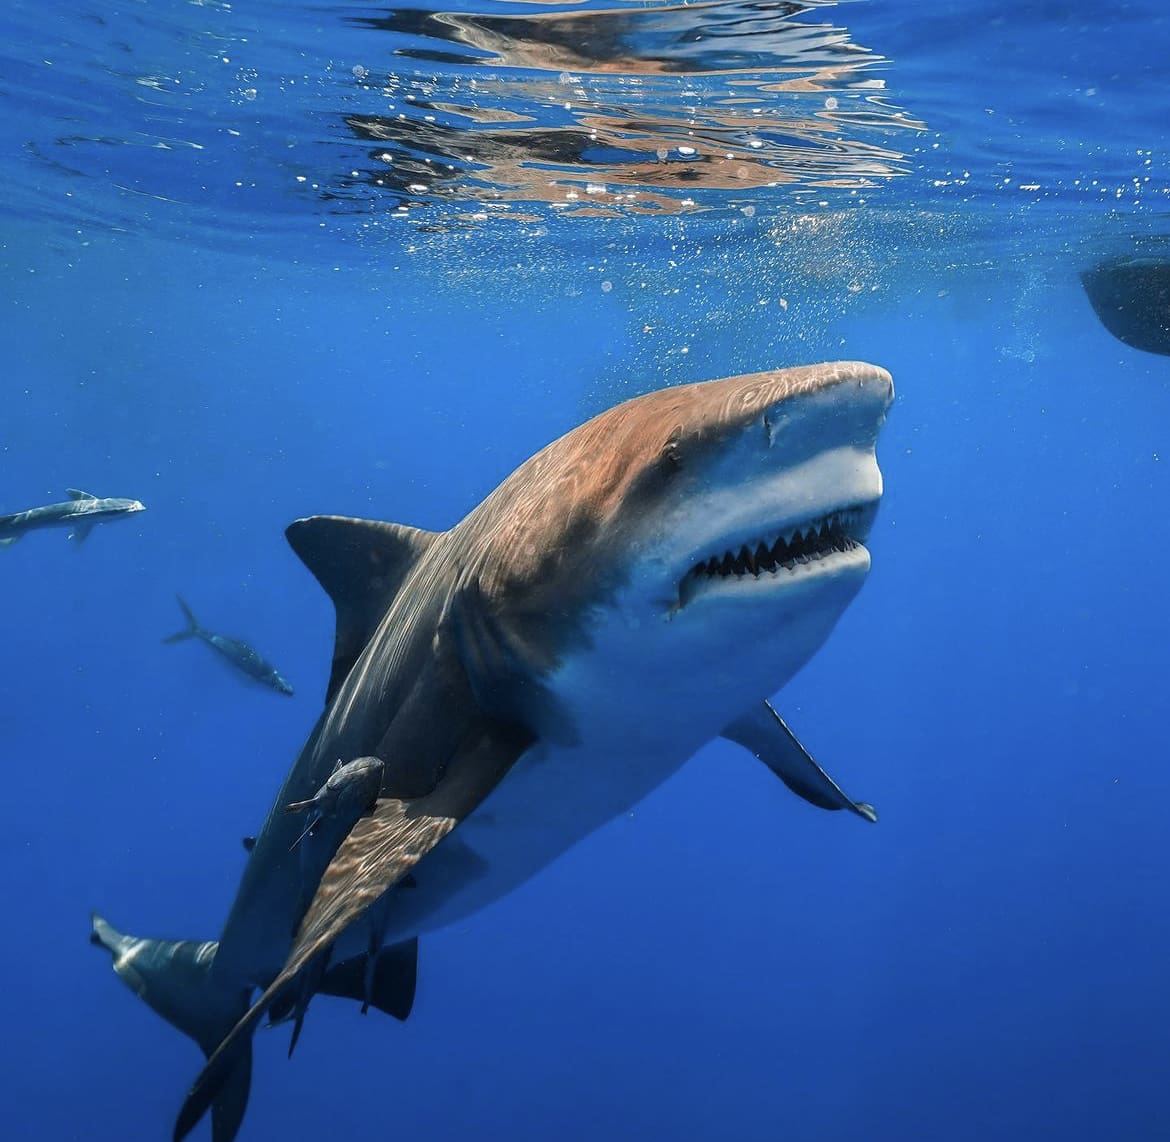 Freshwater aquarium sharks- beauties or the beasts?